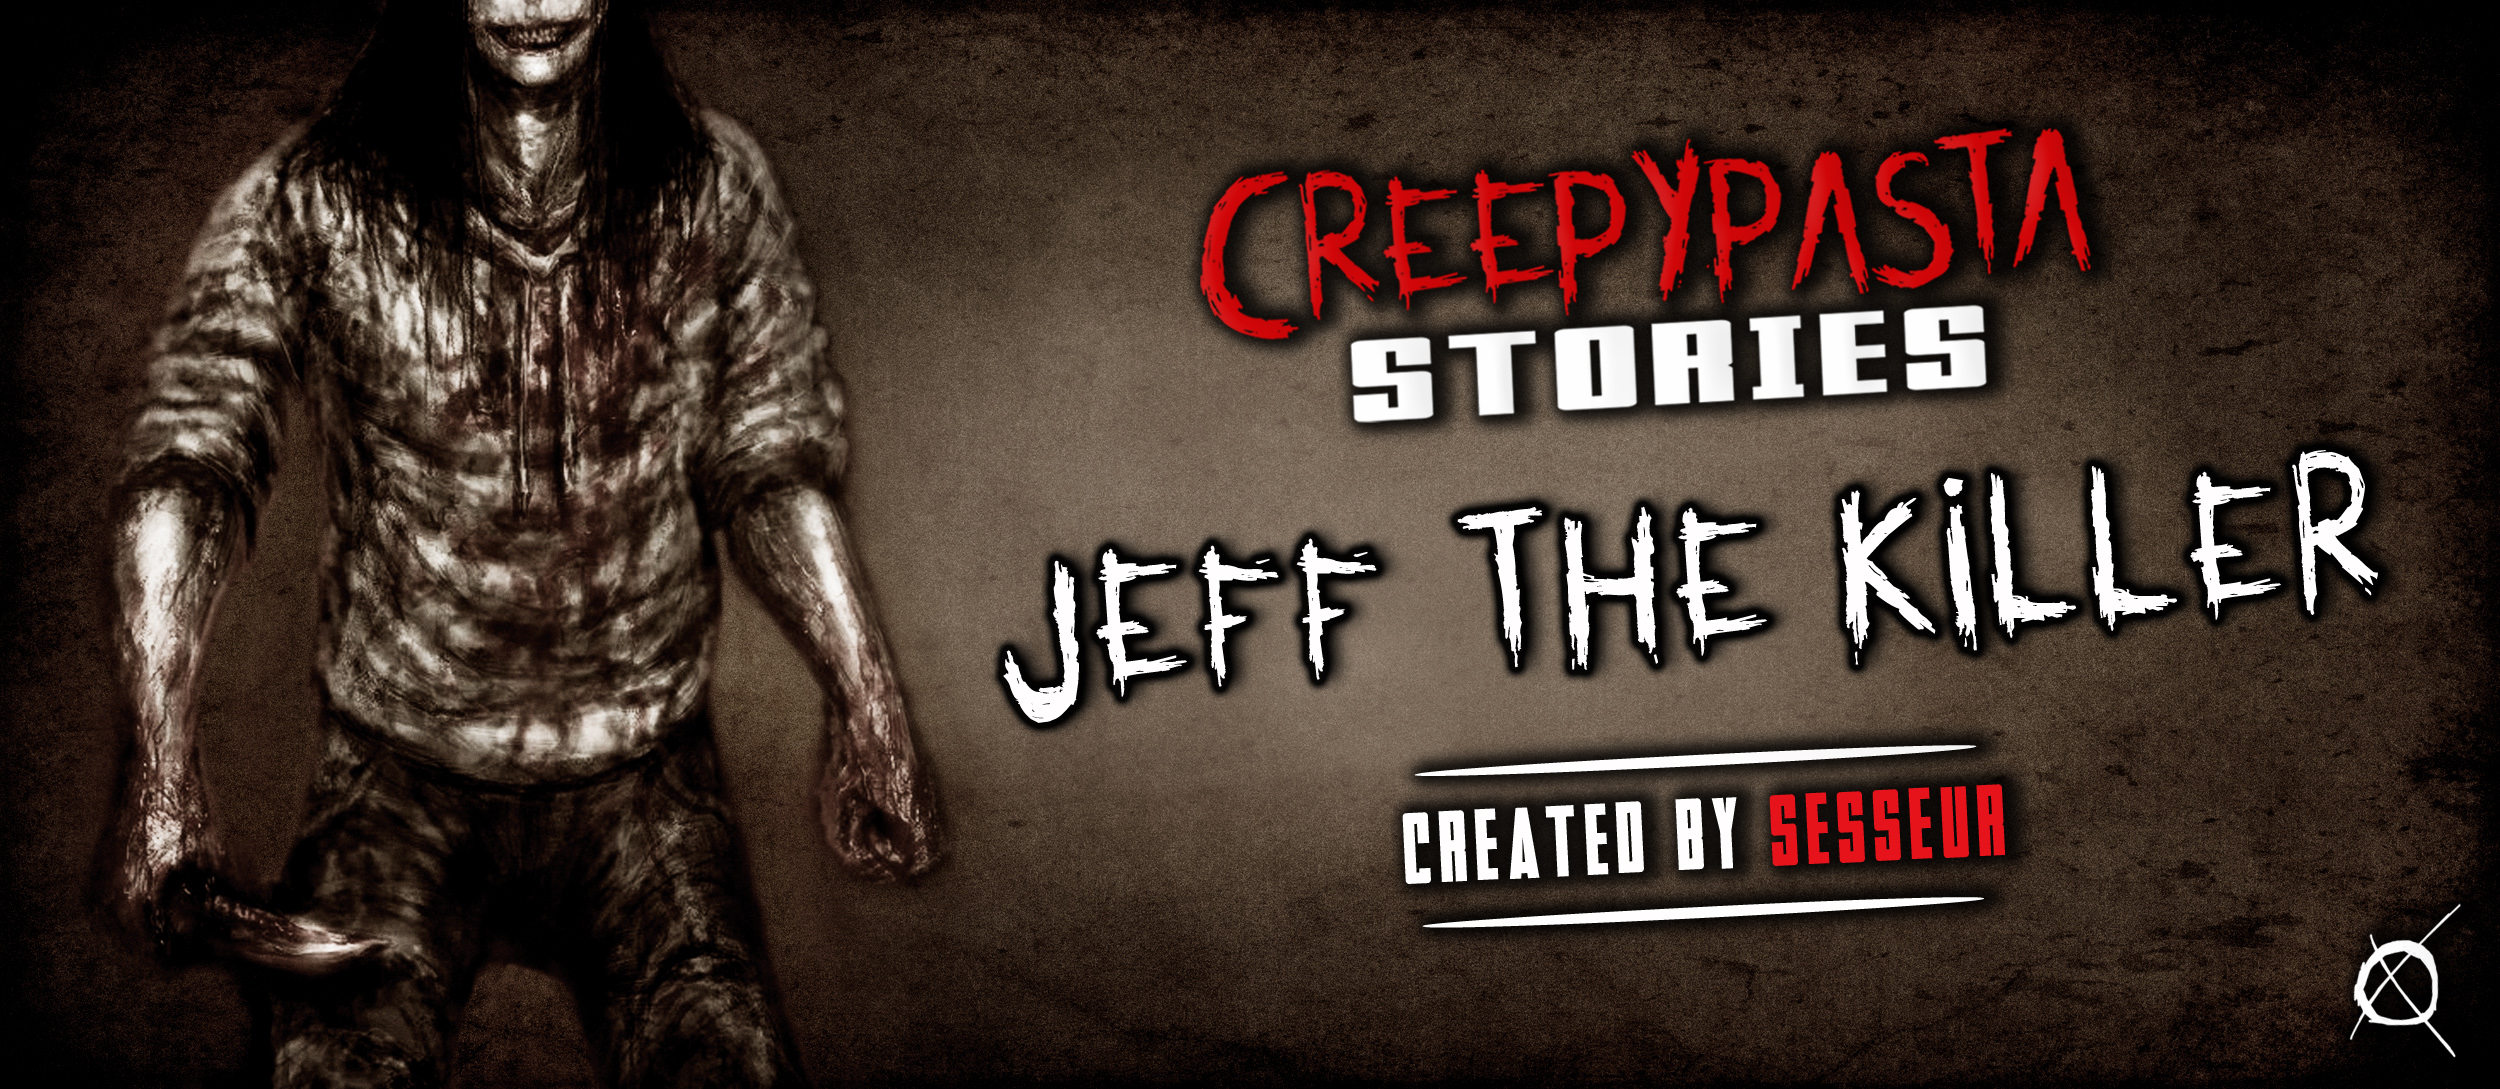 Jeff the Killer  Jeff the killer, Creepypasta, Killer